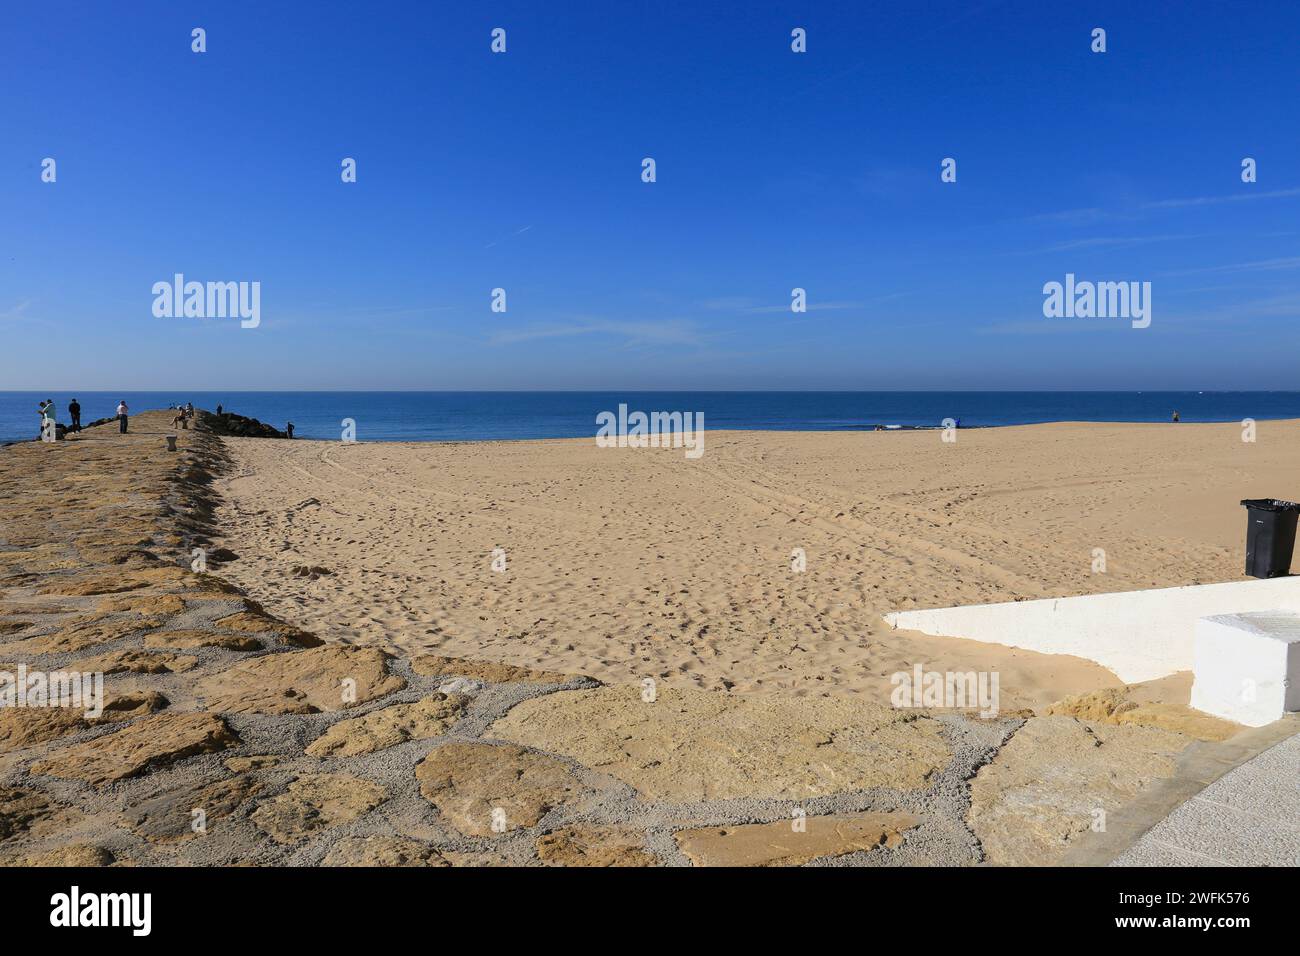 Playa de la Costilla beach and promenade in Rota city, Cadiz, on a sunny day Stock Photo